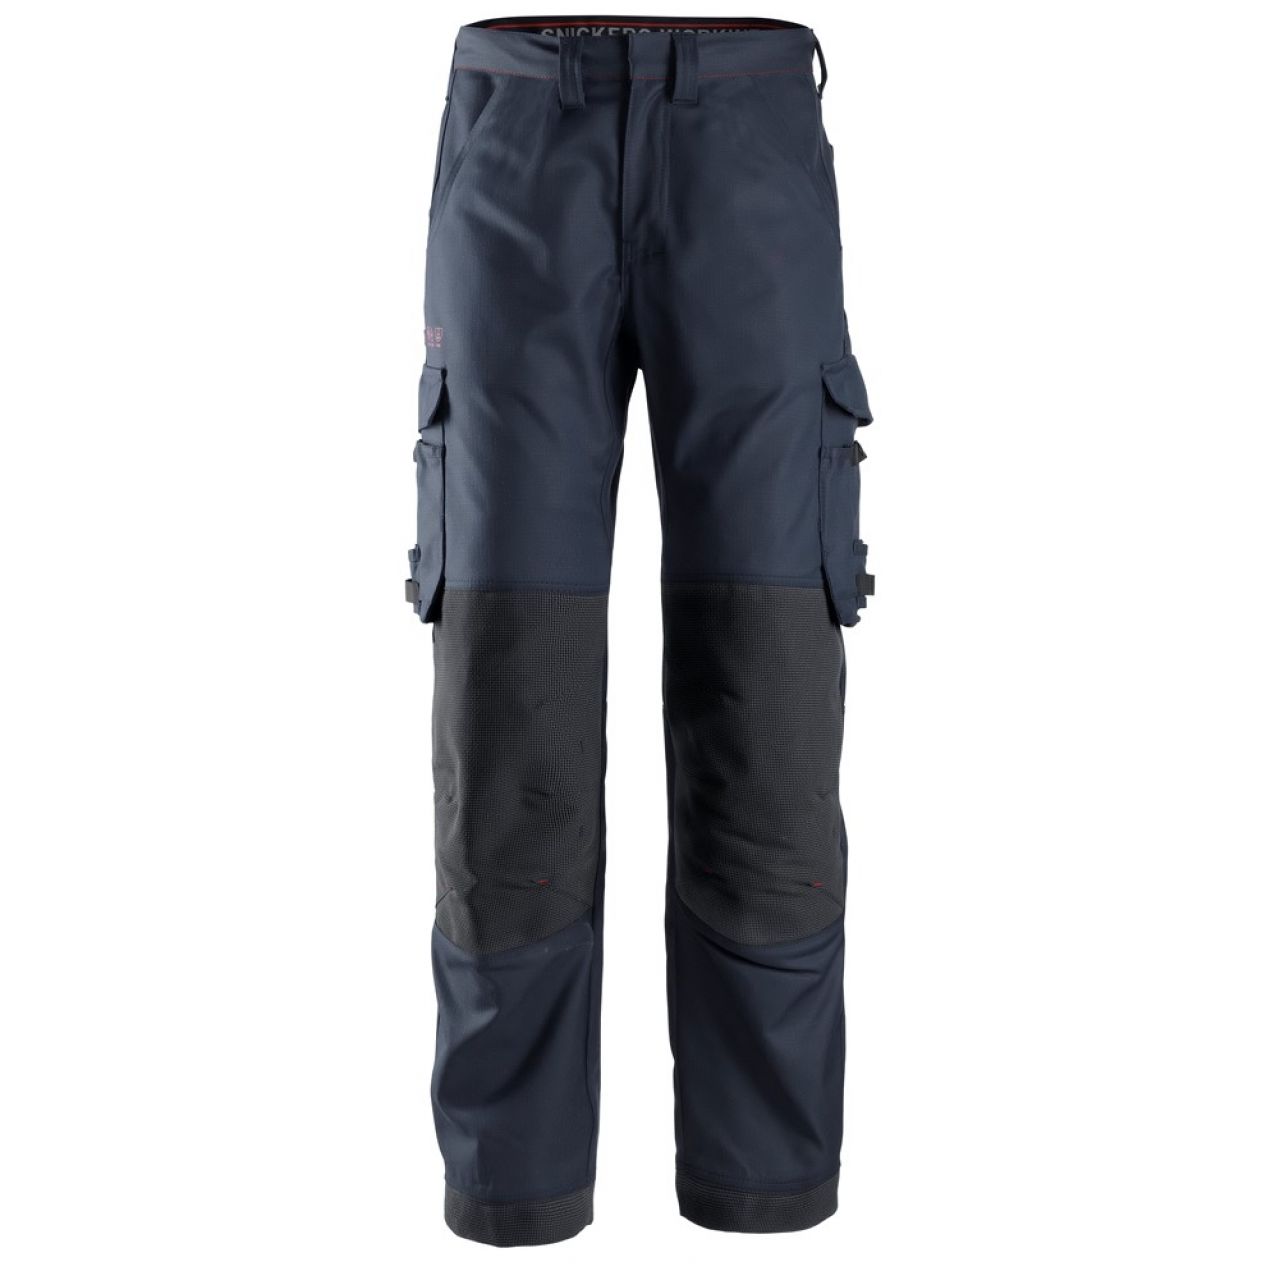 6362 Pantalones largos de trabajo con bolsillos simétricos ProtecWork azul marino talla 88